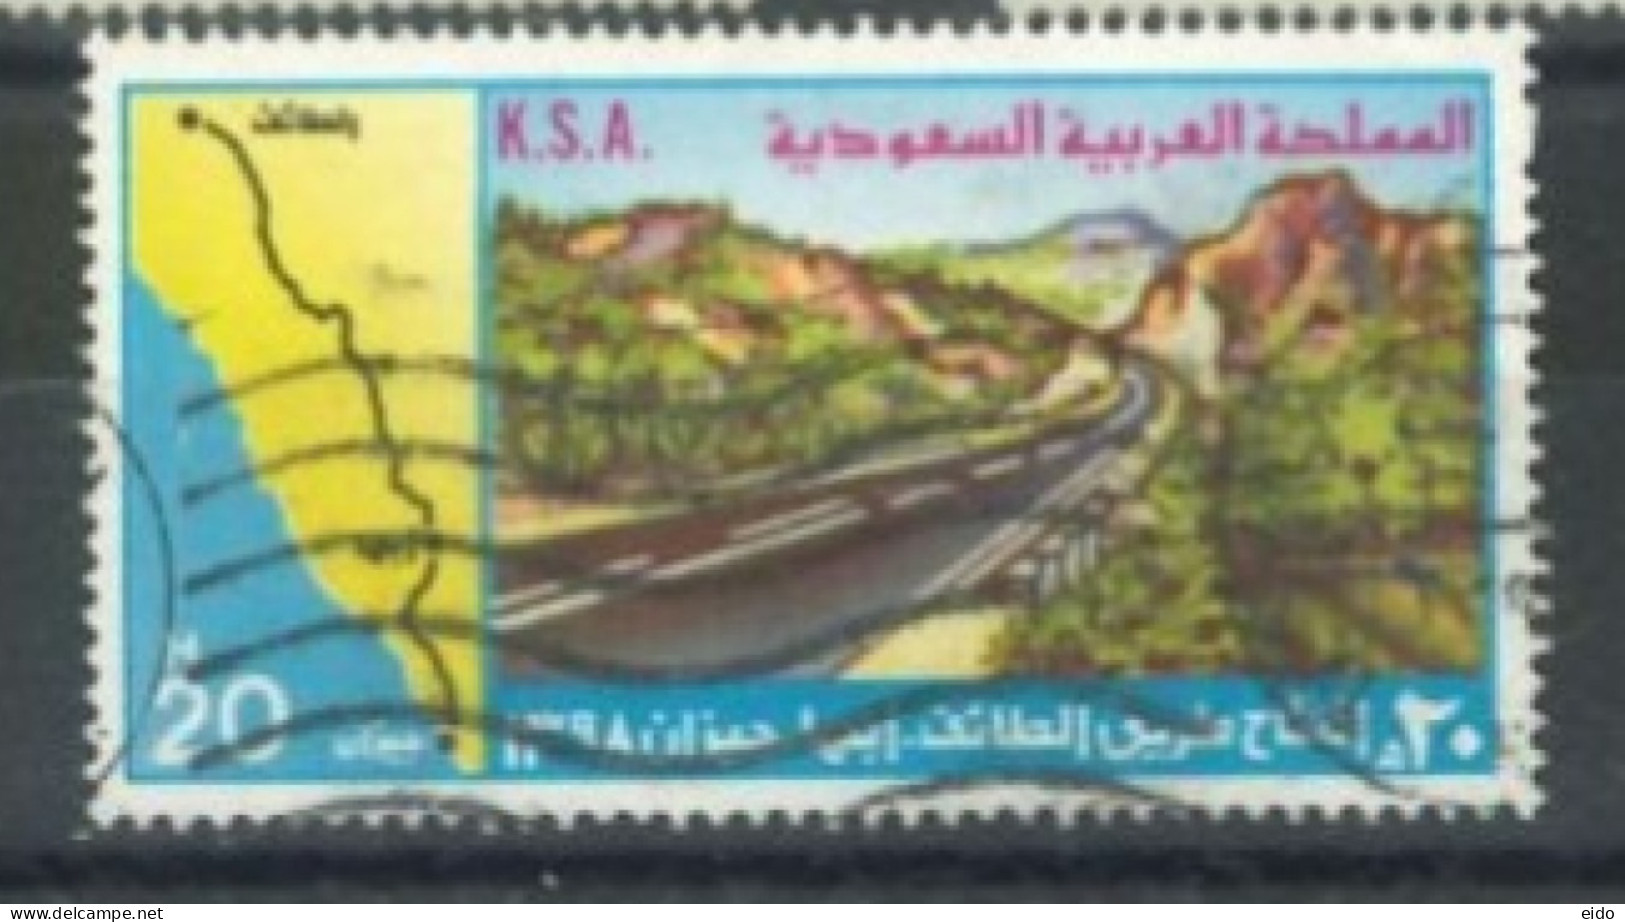 SAUDI ARABIA - 1978, 0PENING OF TAIF-ABHA-JIZAN ROAD STAMP, SG # 1214, USED. - Arabie Saoudite